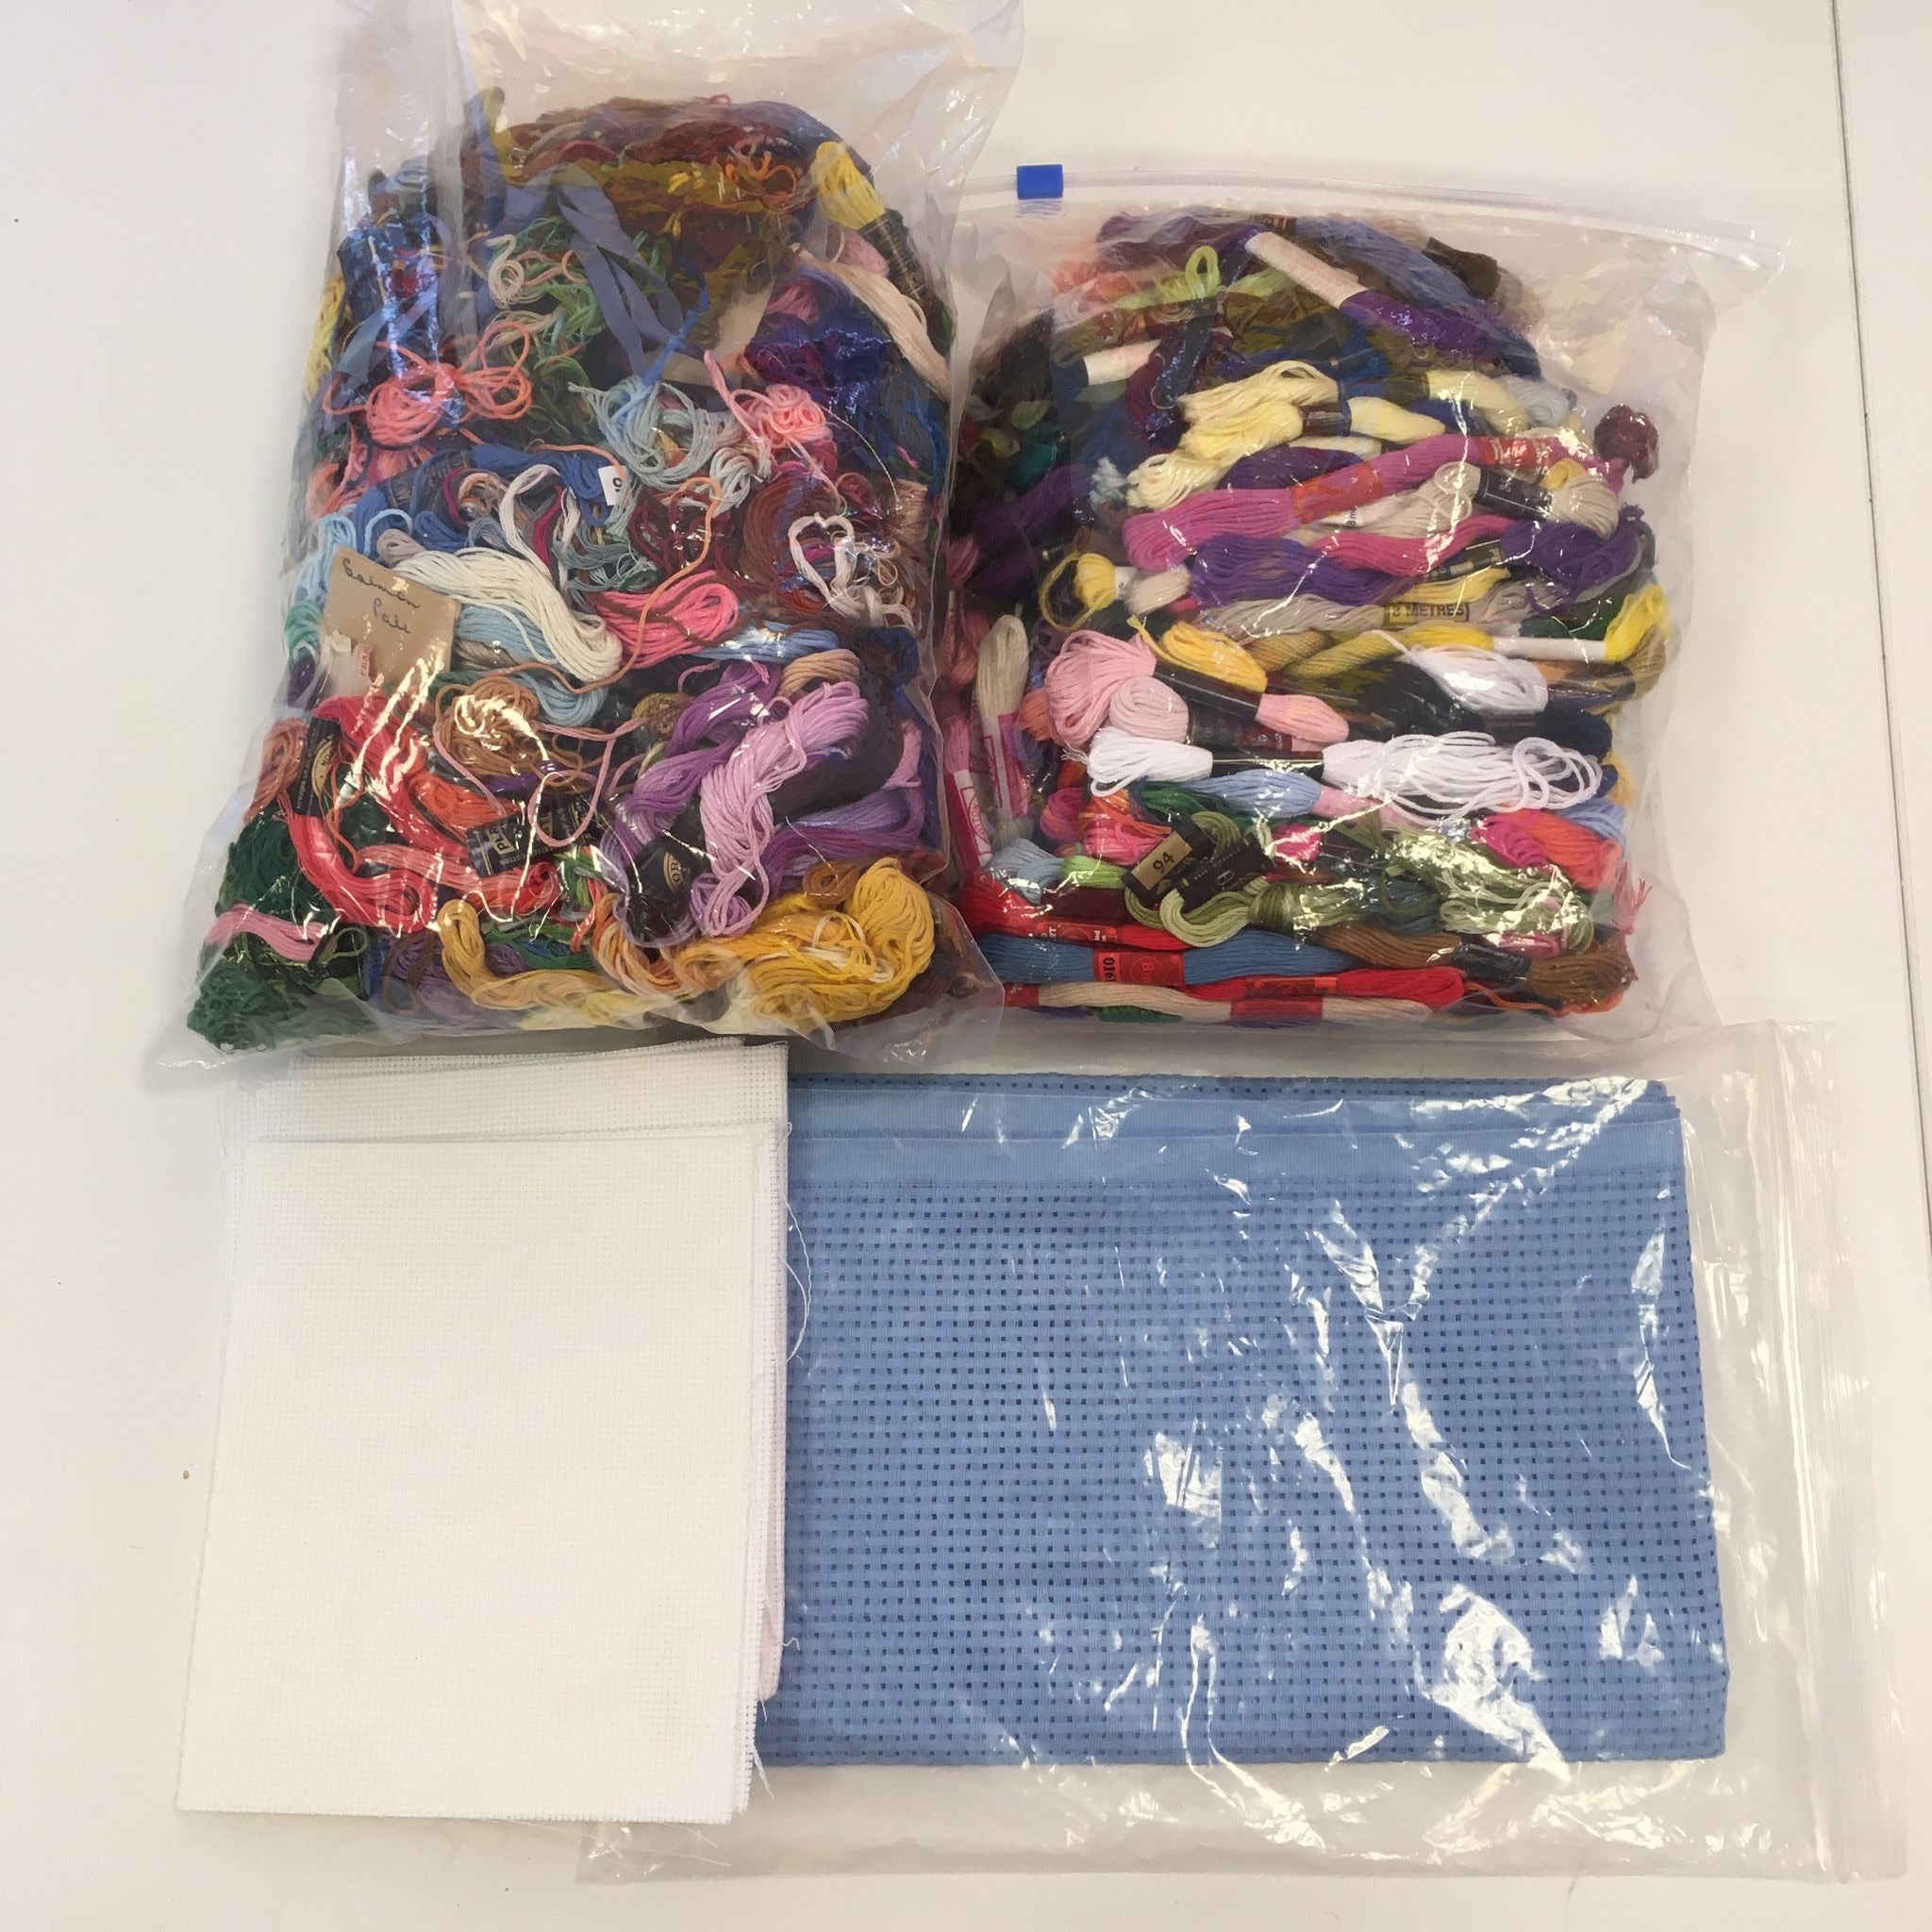 Bag 28 - 1kg Needlework, stretcher bars, embroidery hoops and needlework  needles 0.766kg